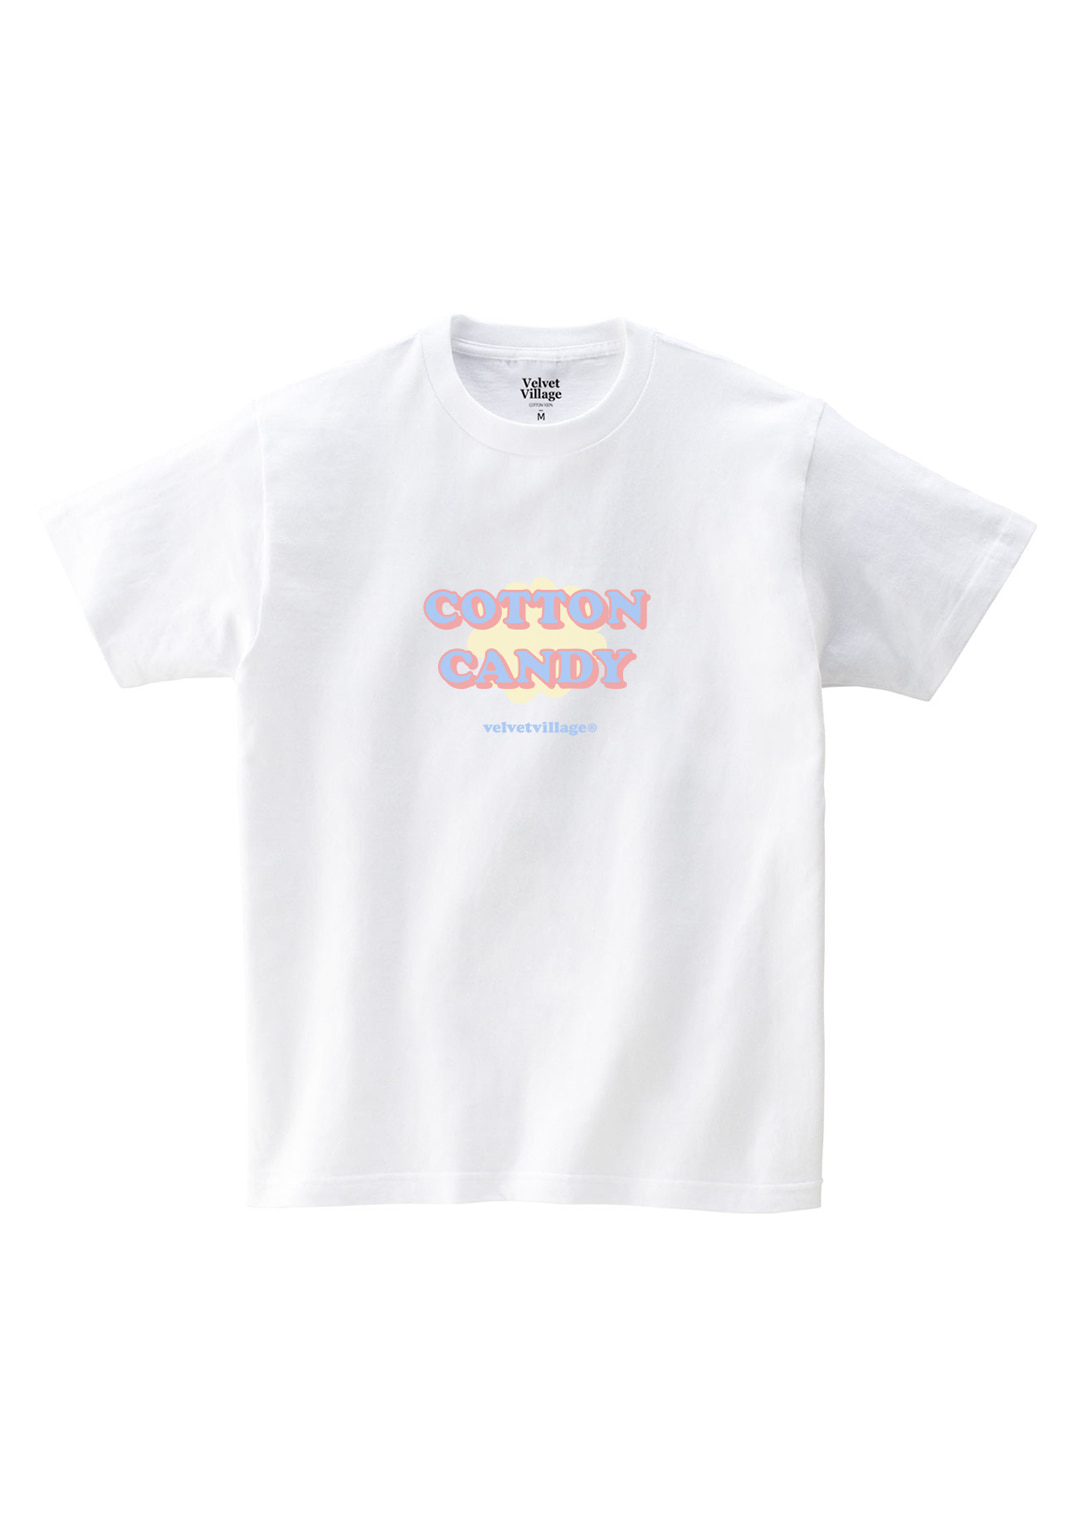 Cottoncandy T-shirt (White)